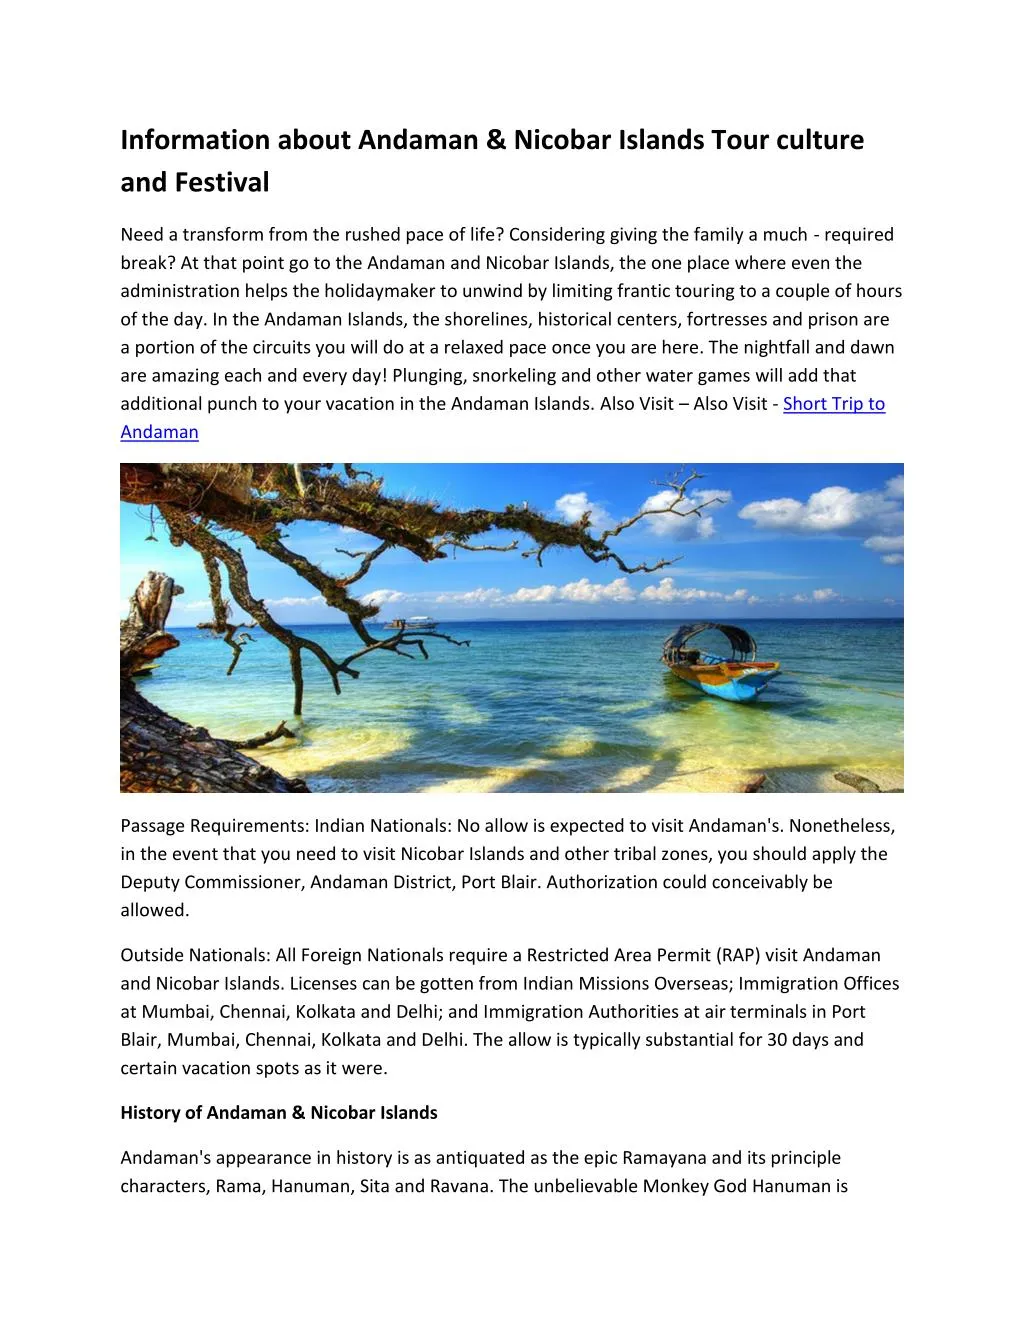 information about andaman nicobar islands tour n.